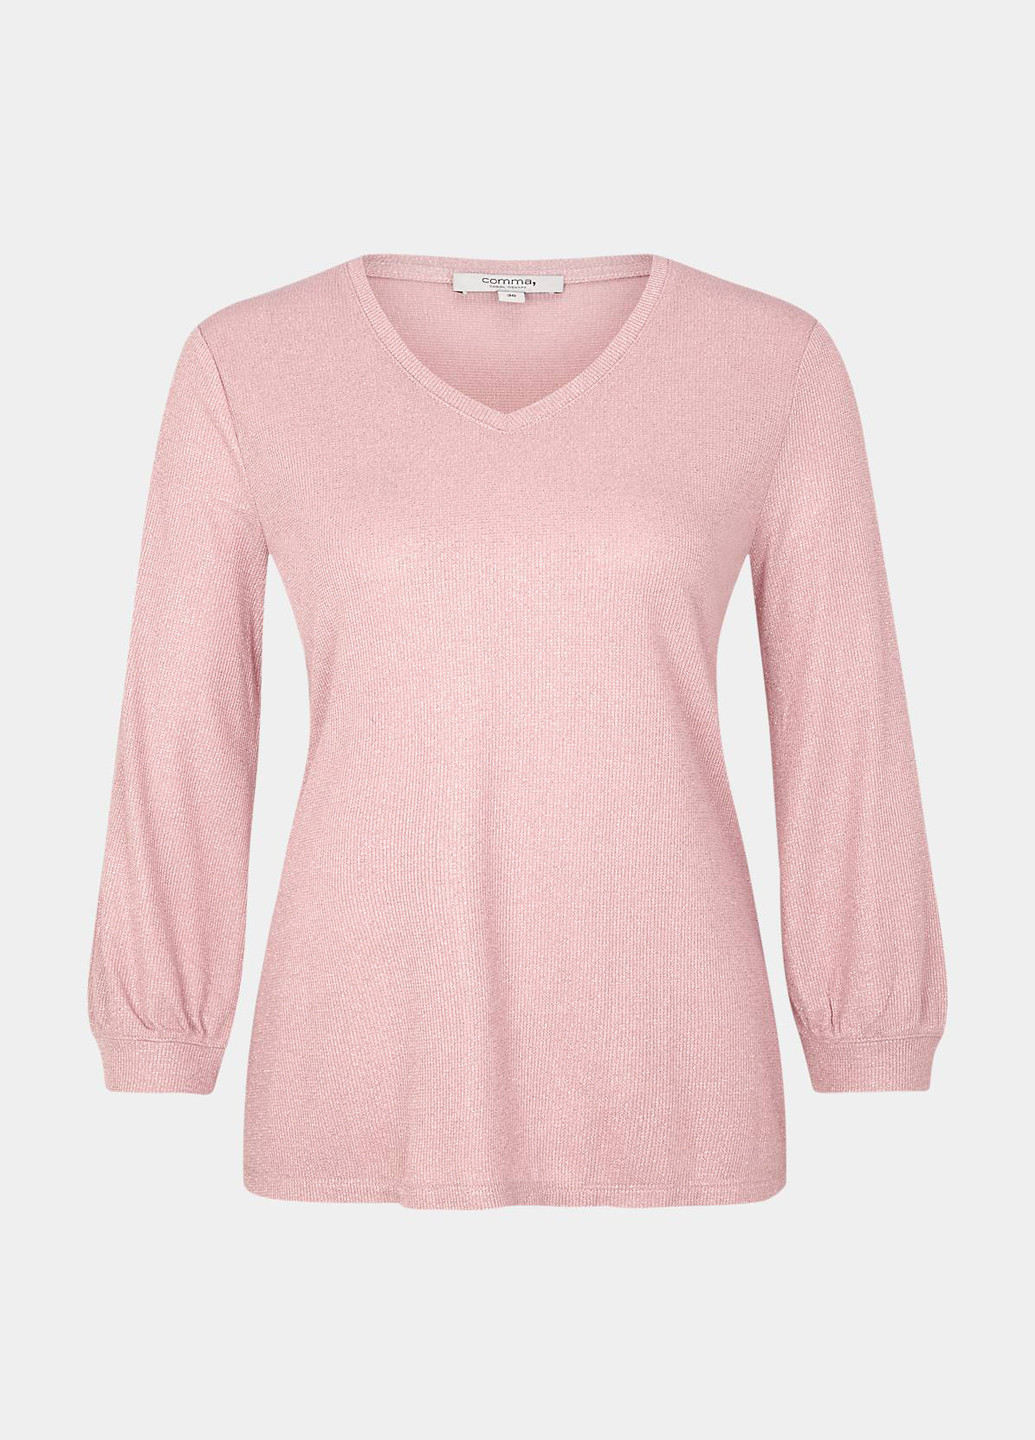 Розовый демисезонный пуловер пуловер Comma, by s.Oliver